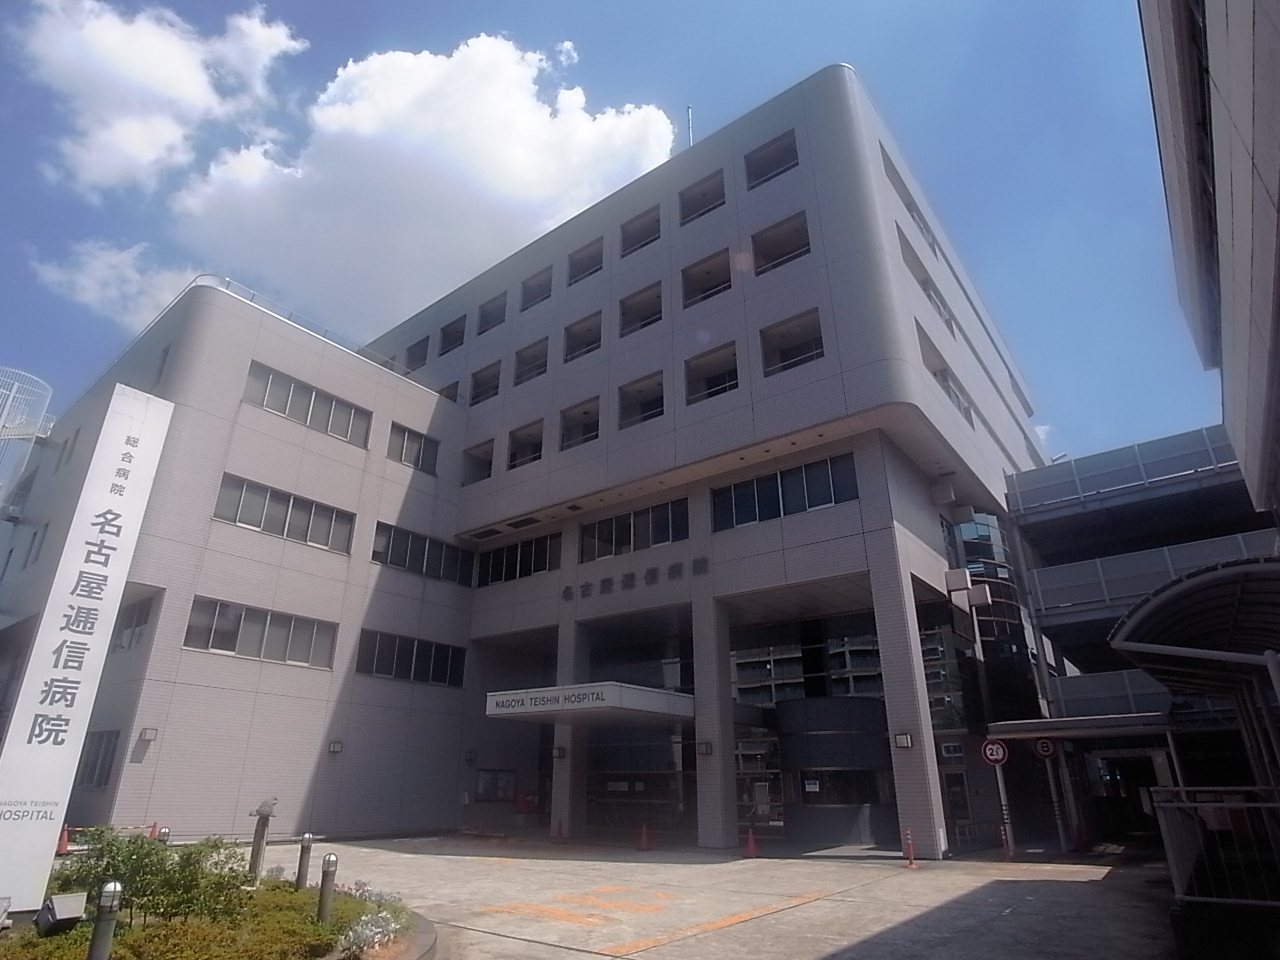 Hospital. 459m to Nagoya the Communications Hospital (General Hospital) (hospital)